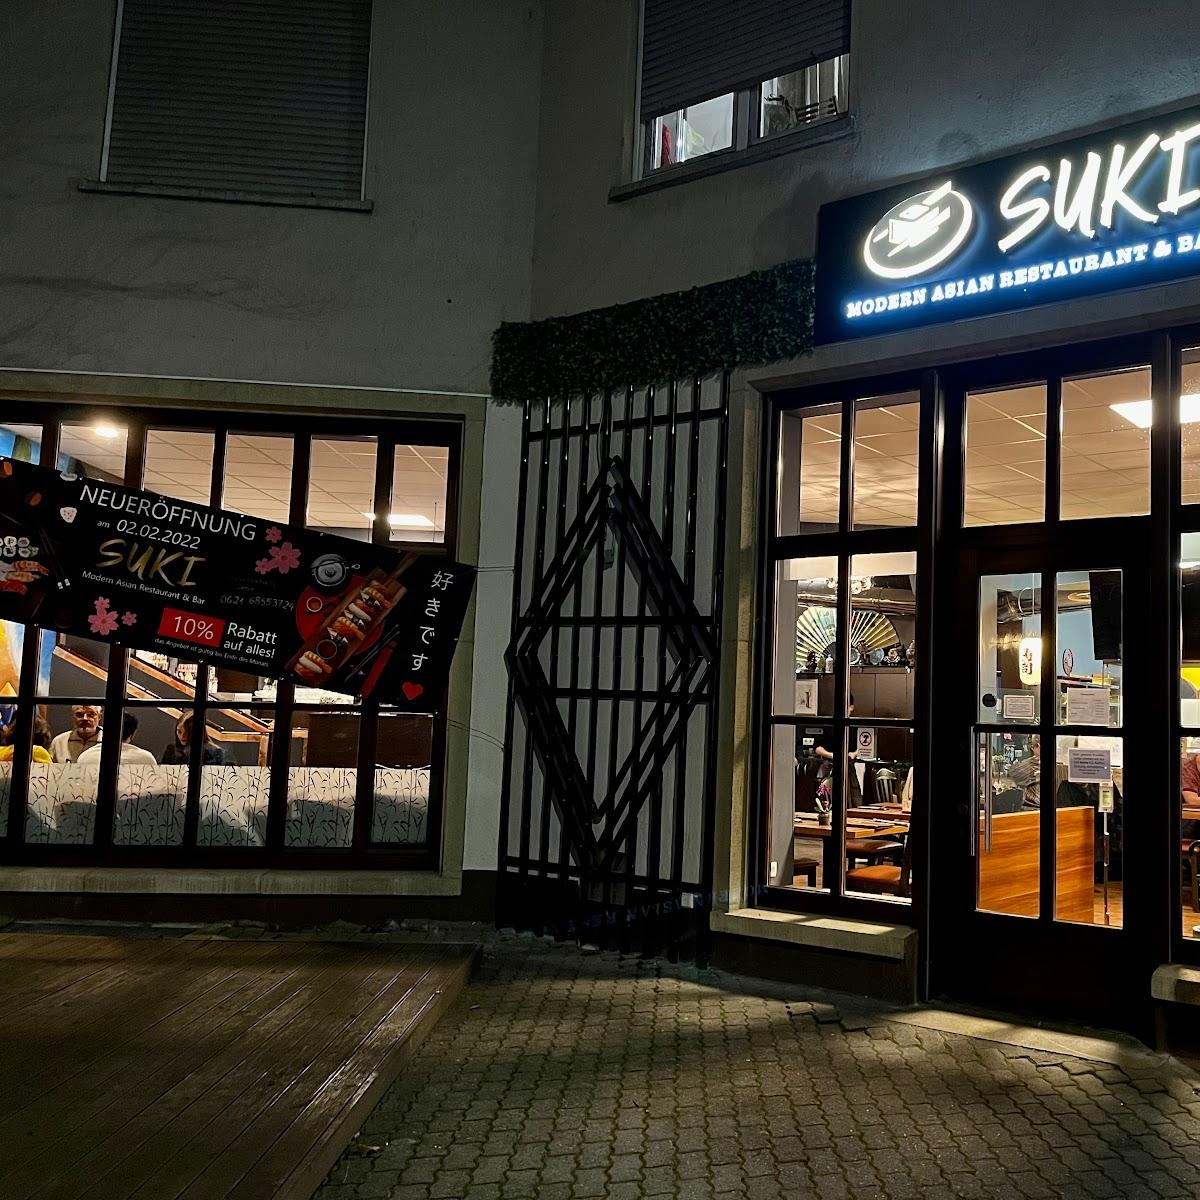 Restaurant "SUKI – Modern Asian Restaurant & Bar" in Ludwigshafen am Rhein